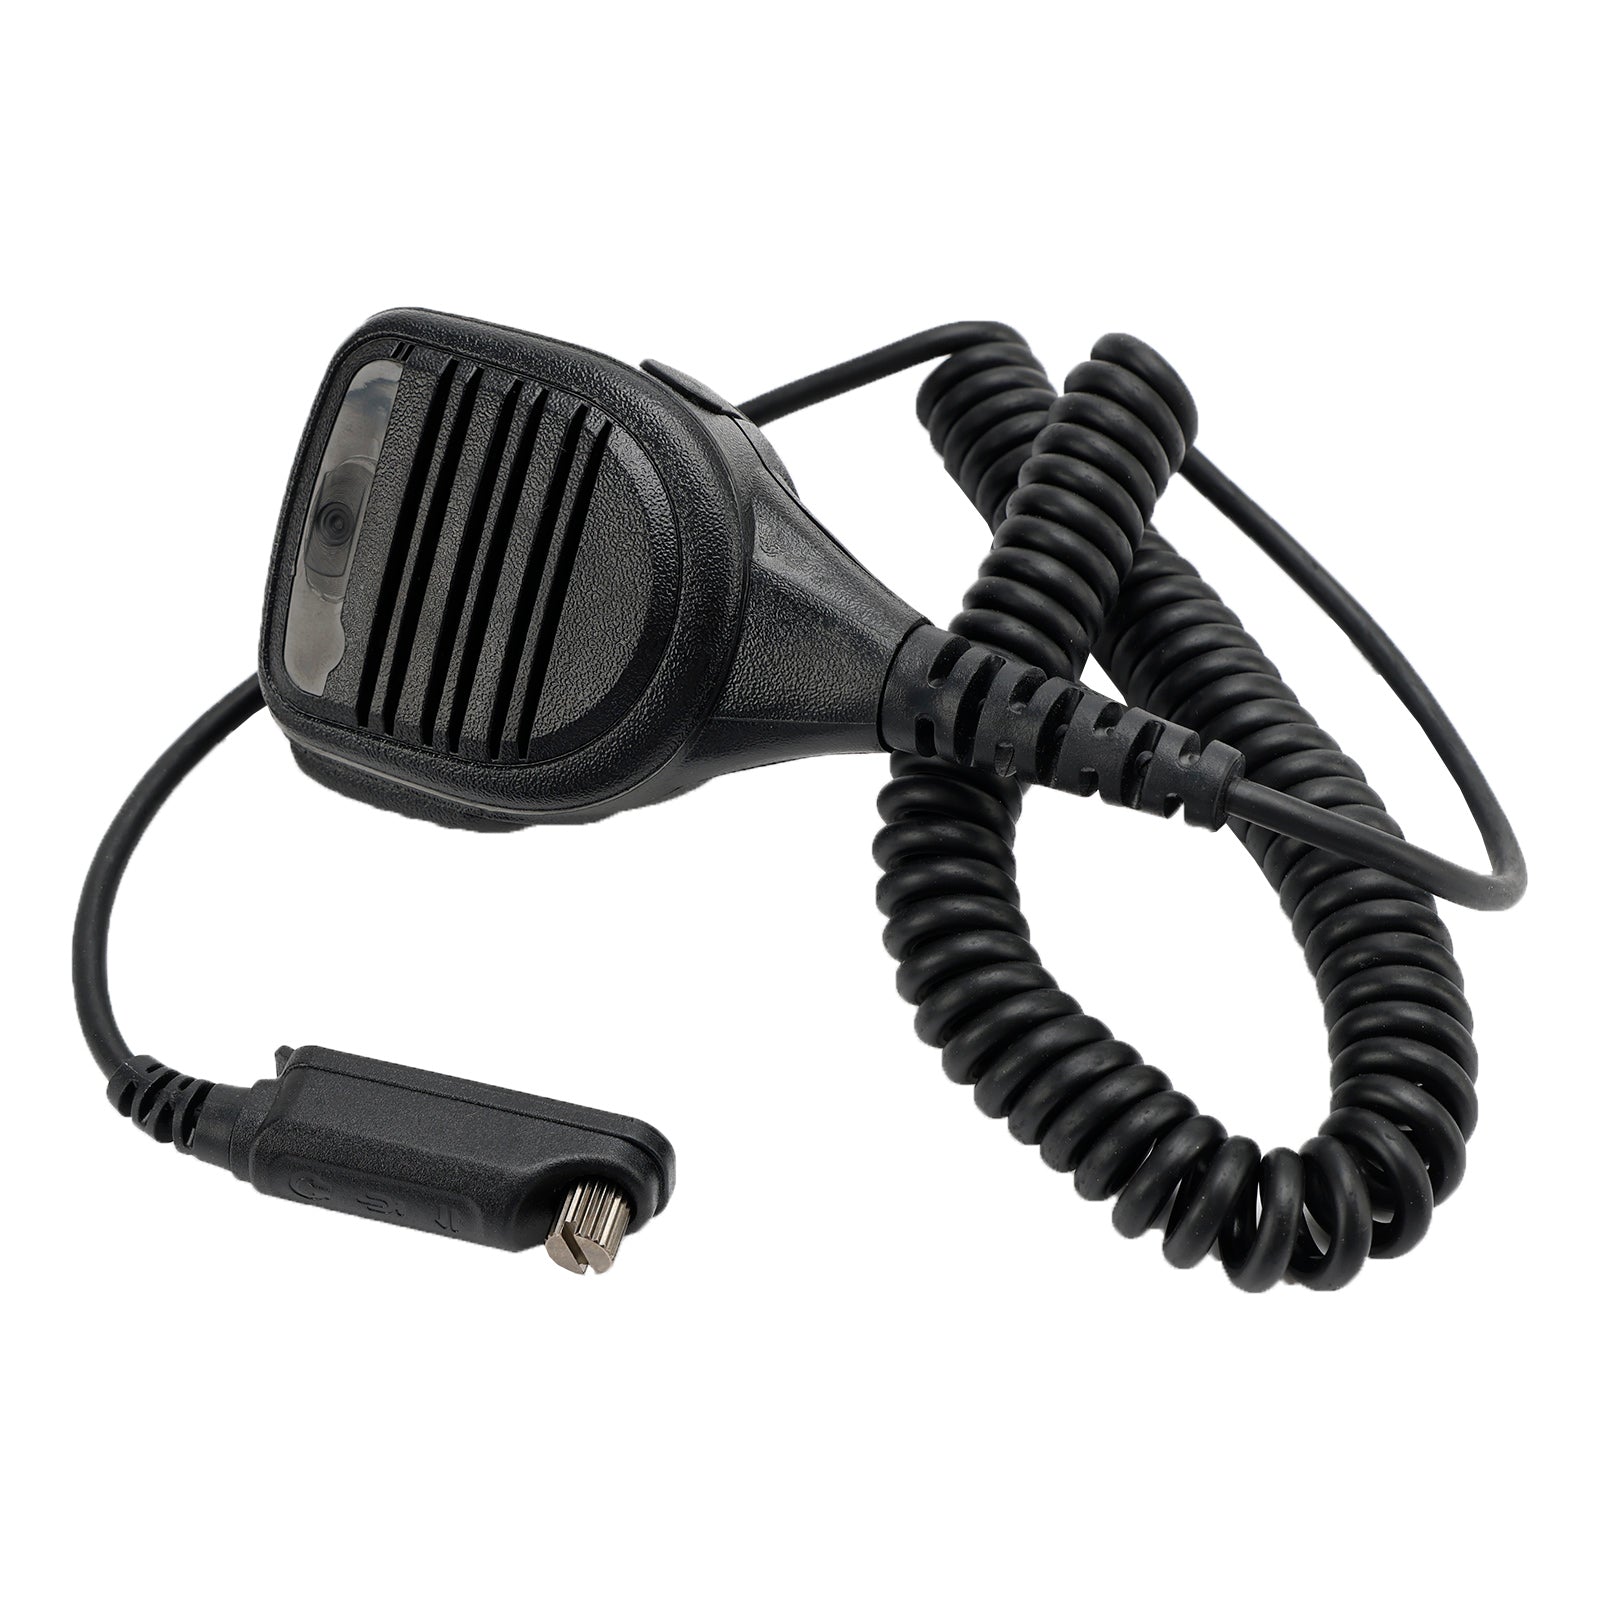 Spkeaker de microphone à main PH790-SM08, compatible avec la radio talkie-walkie Caltta PH790